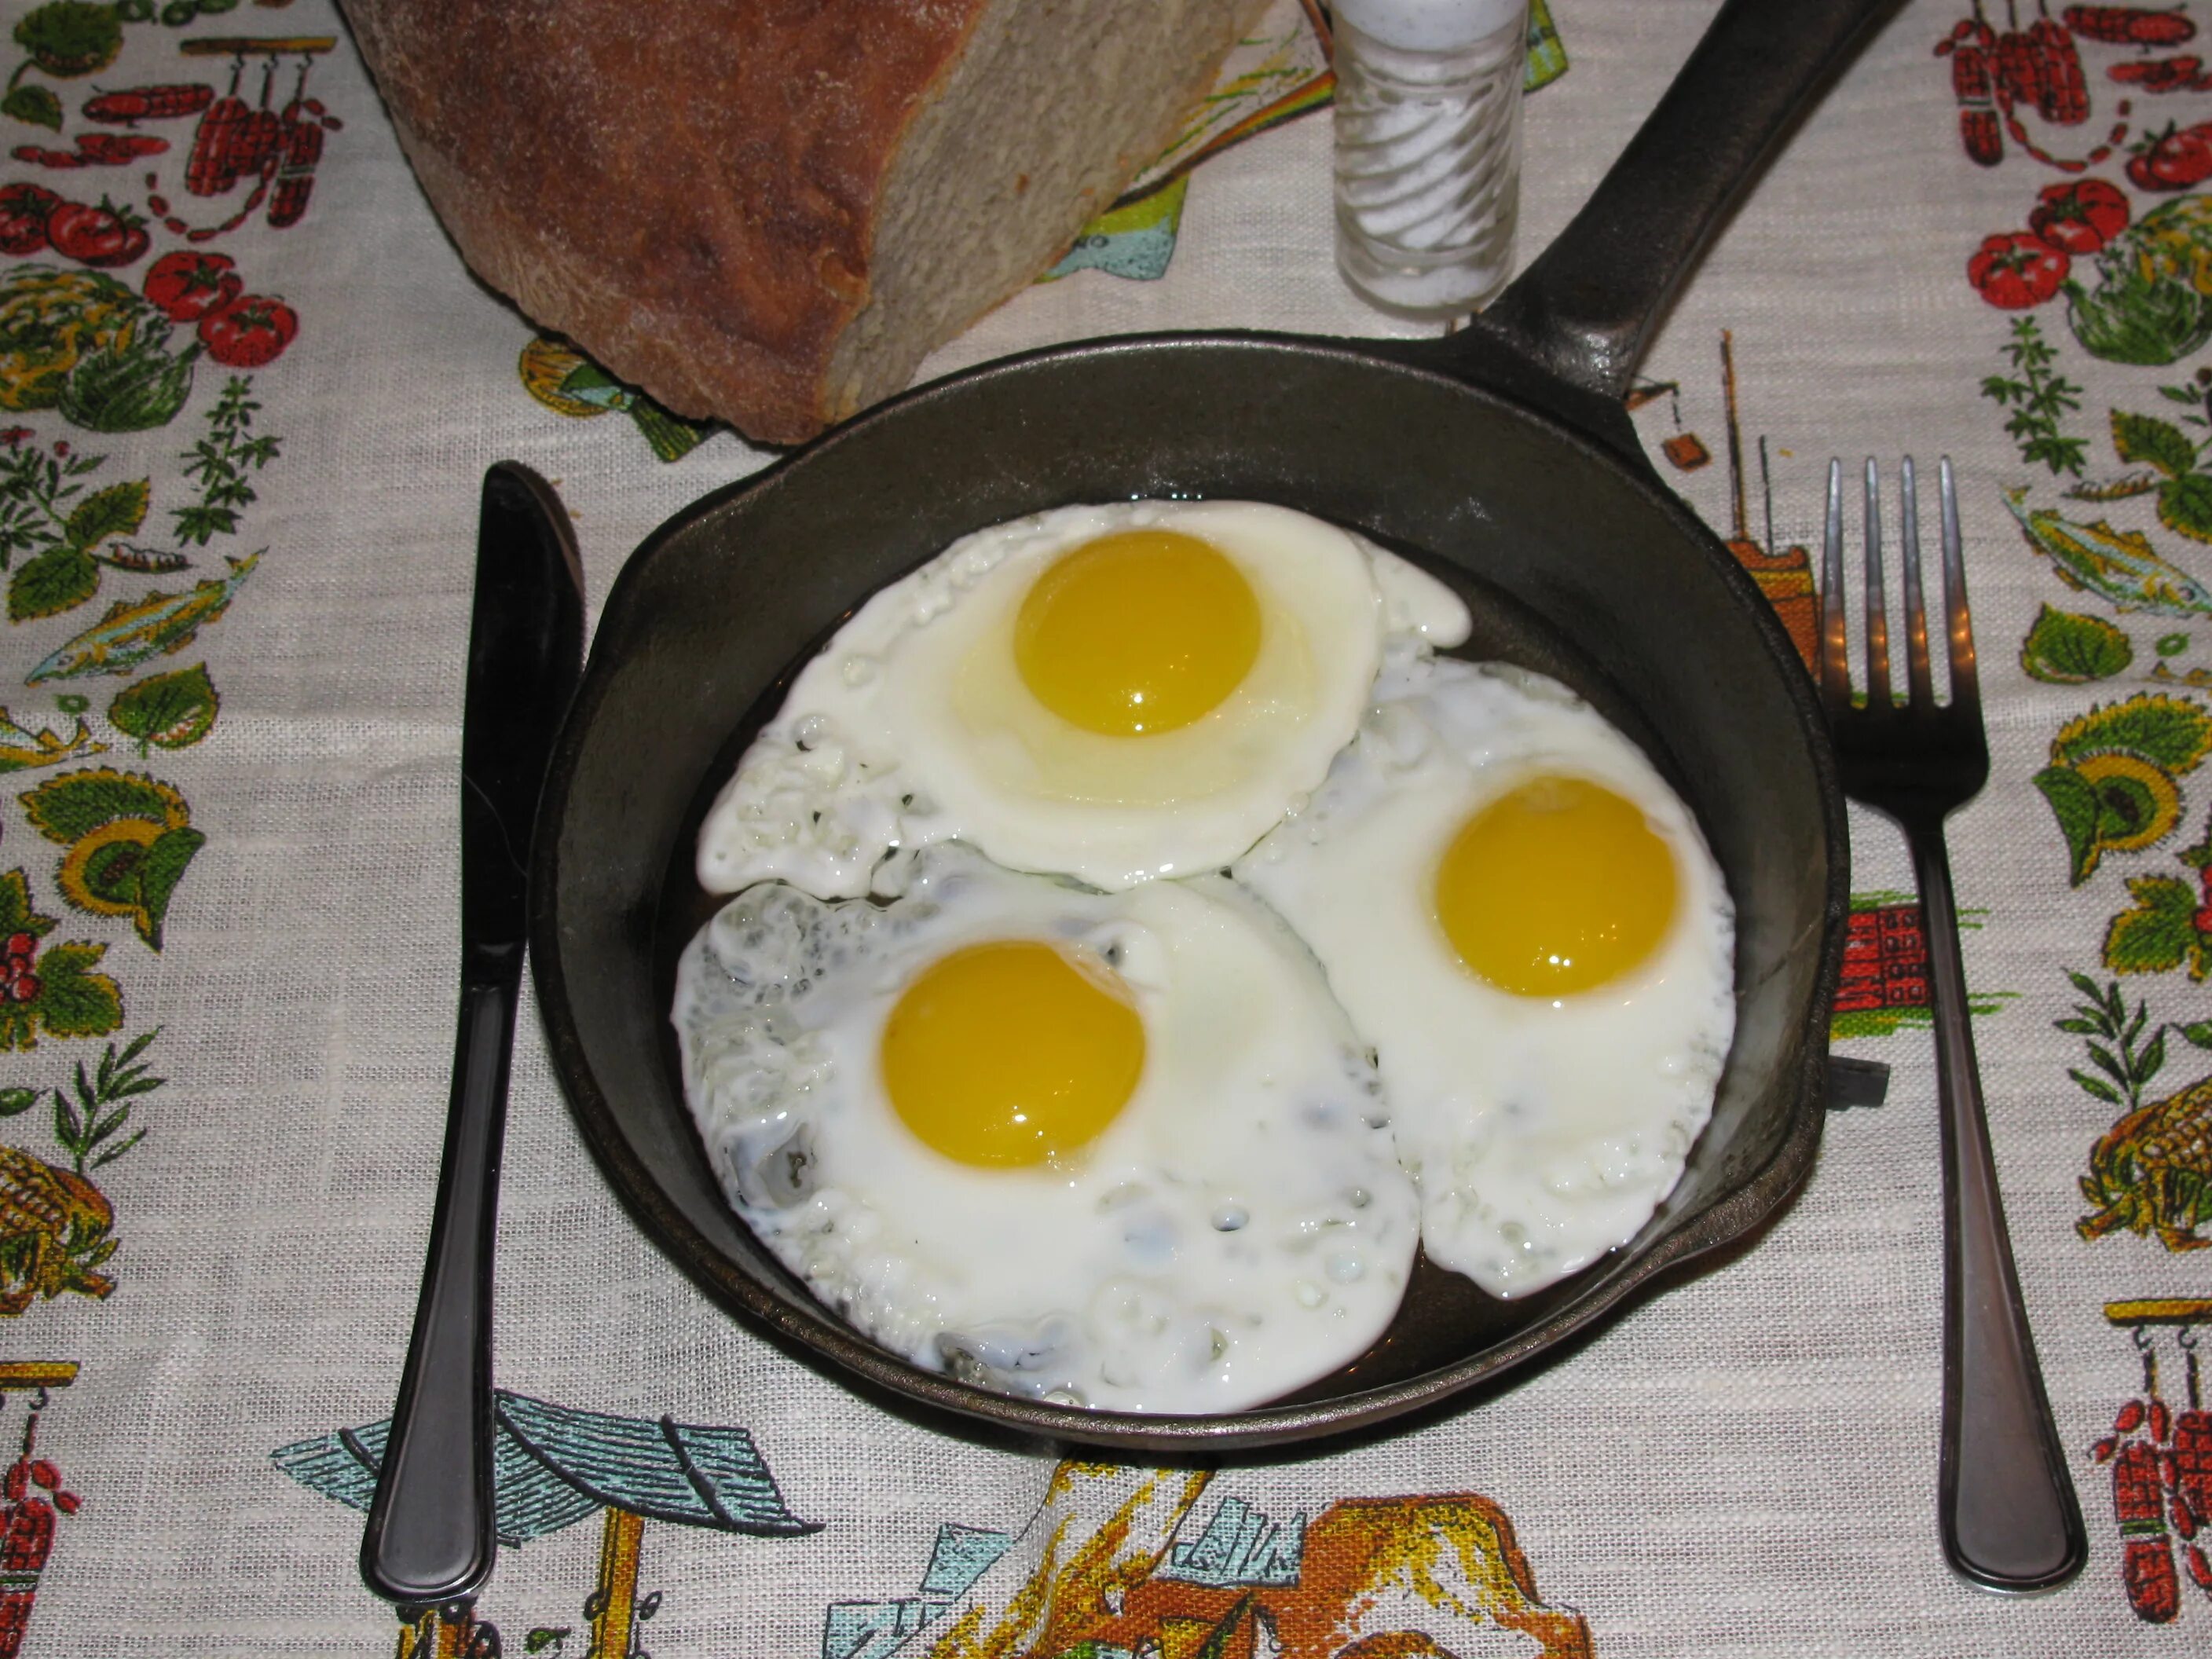 Яичница глазунья 3 яйца. Яичница. Сковорода с яичницей. Сковородка для яичницы. Оригинальная яичница.